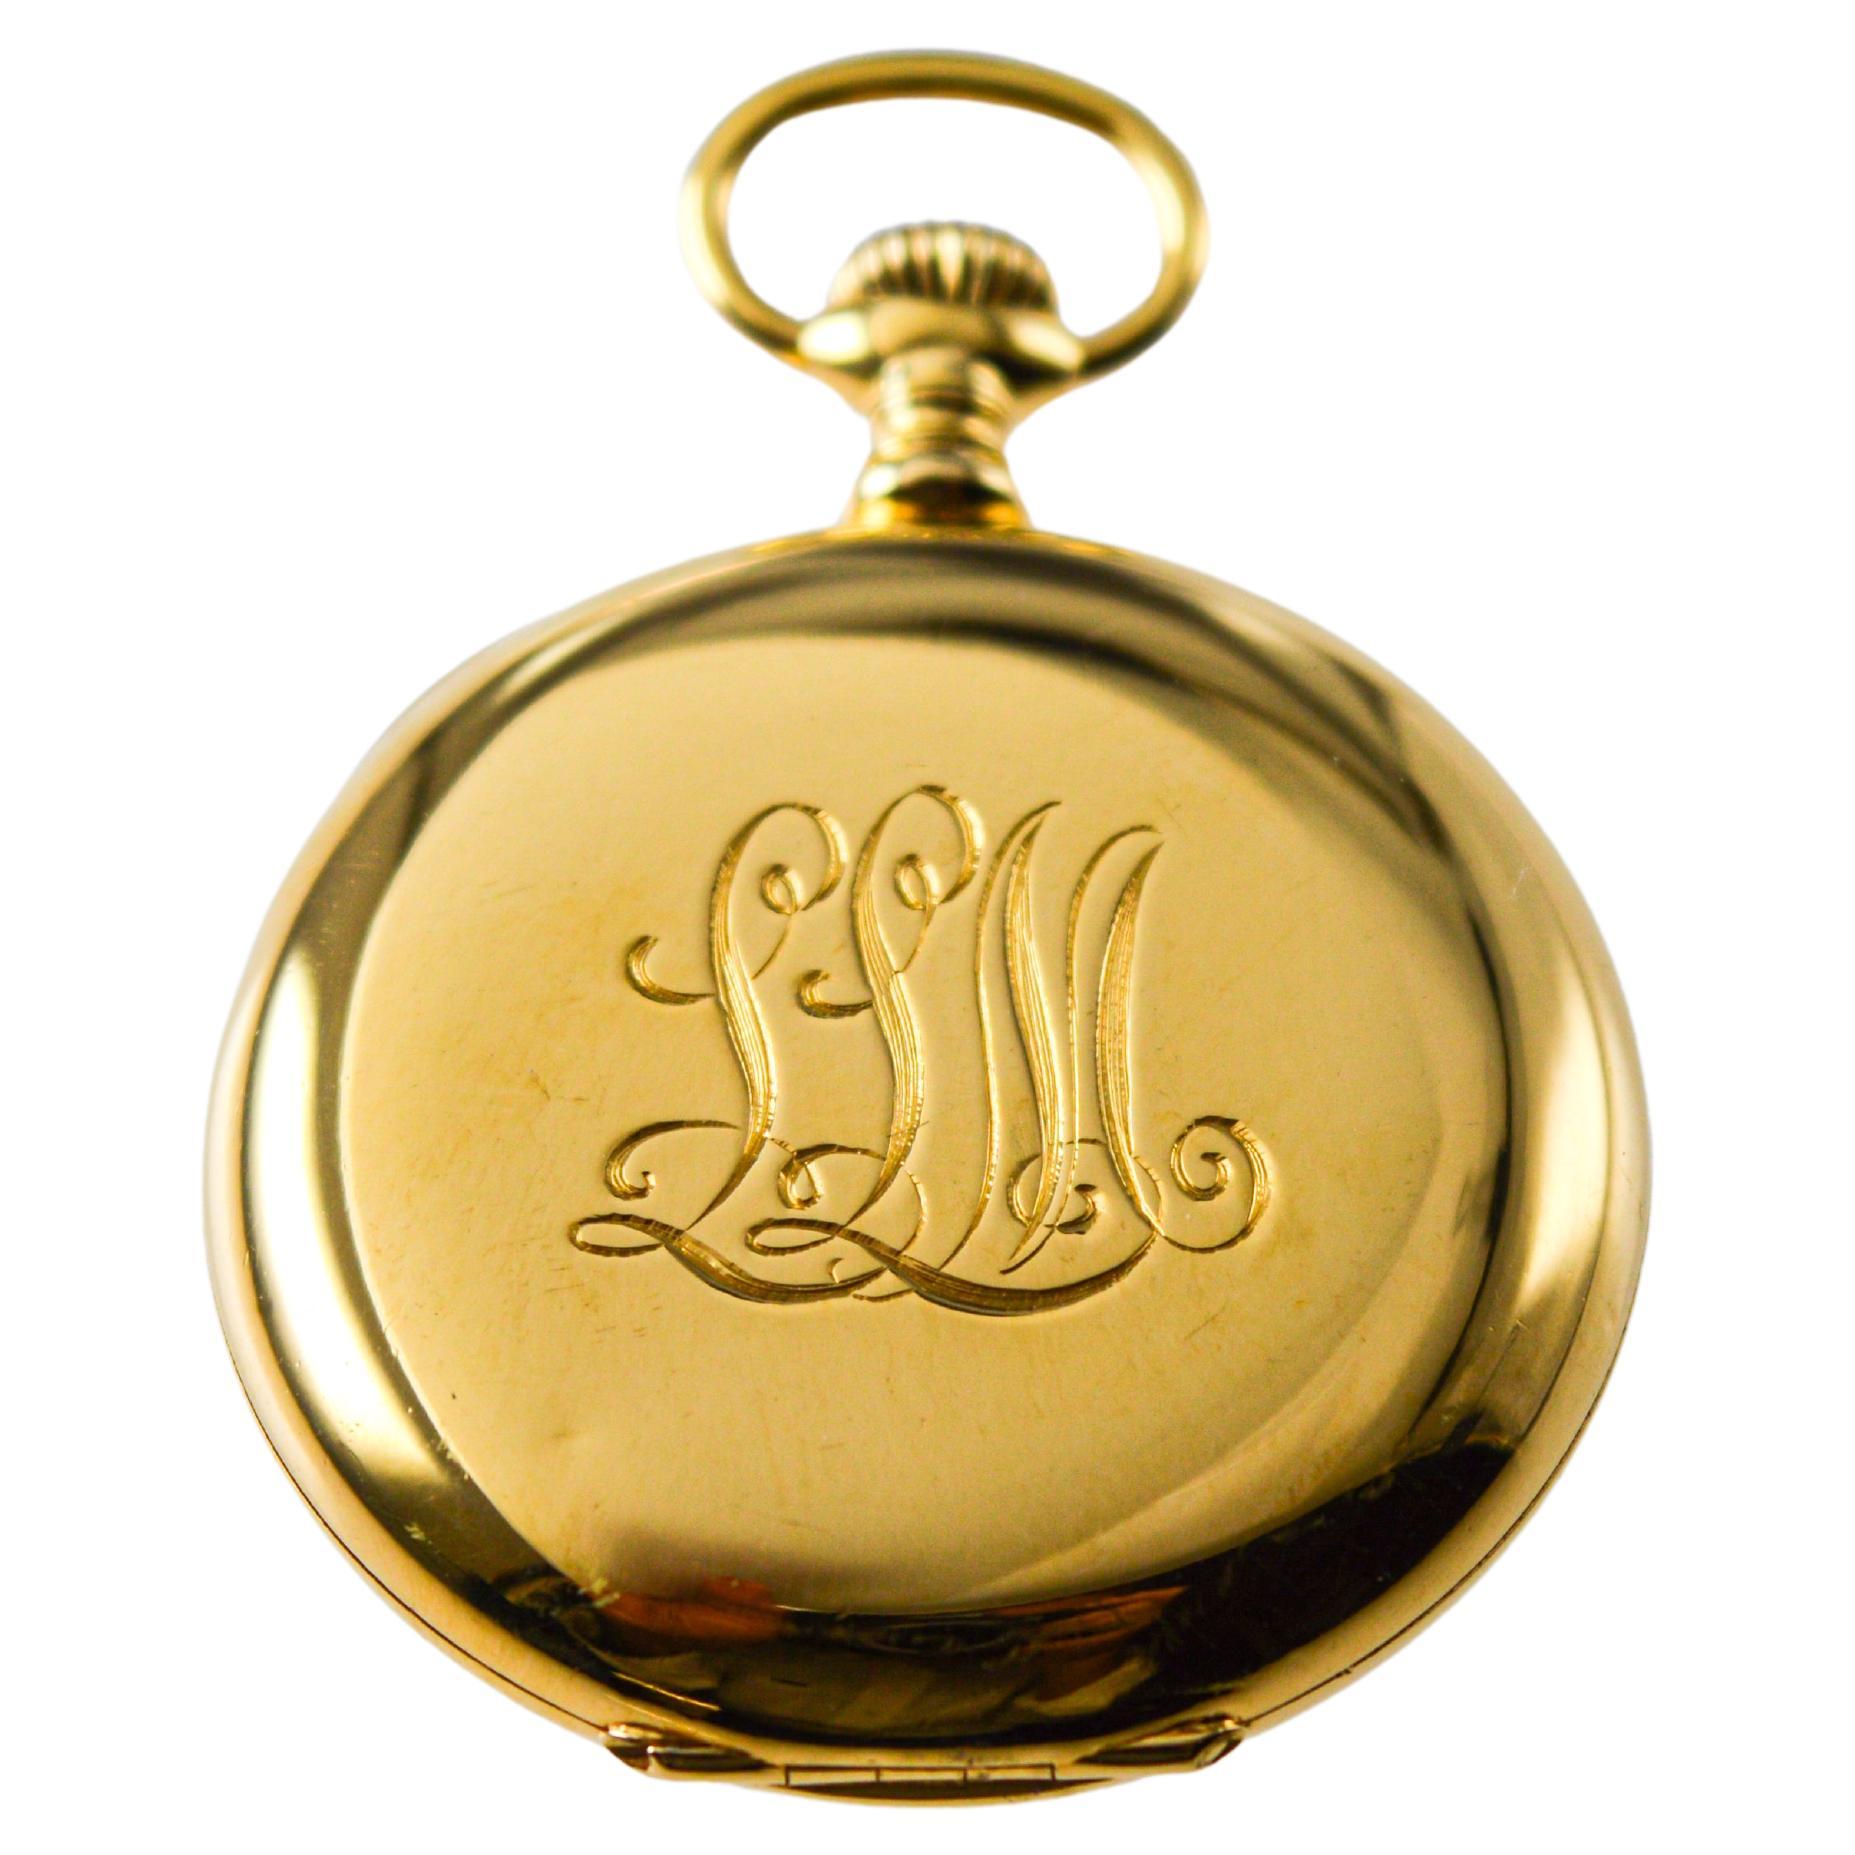 Tiffany & Co Montre pendentif en or 18 carats avec chaîne en or de 1912 et cadran en émail en vente 6